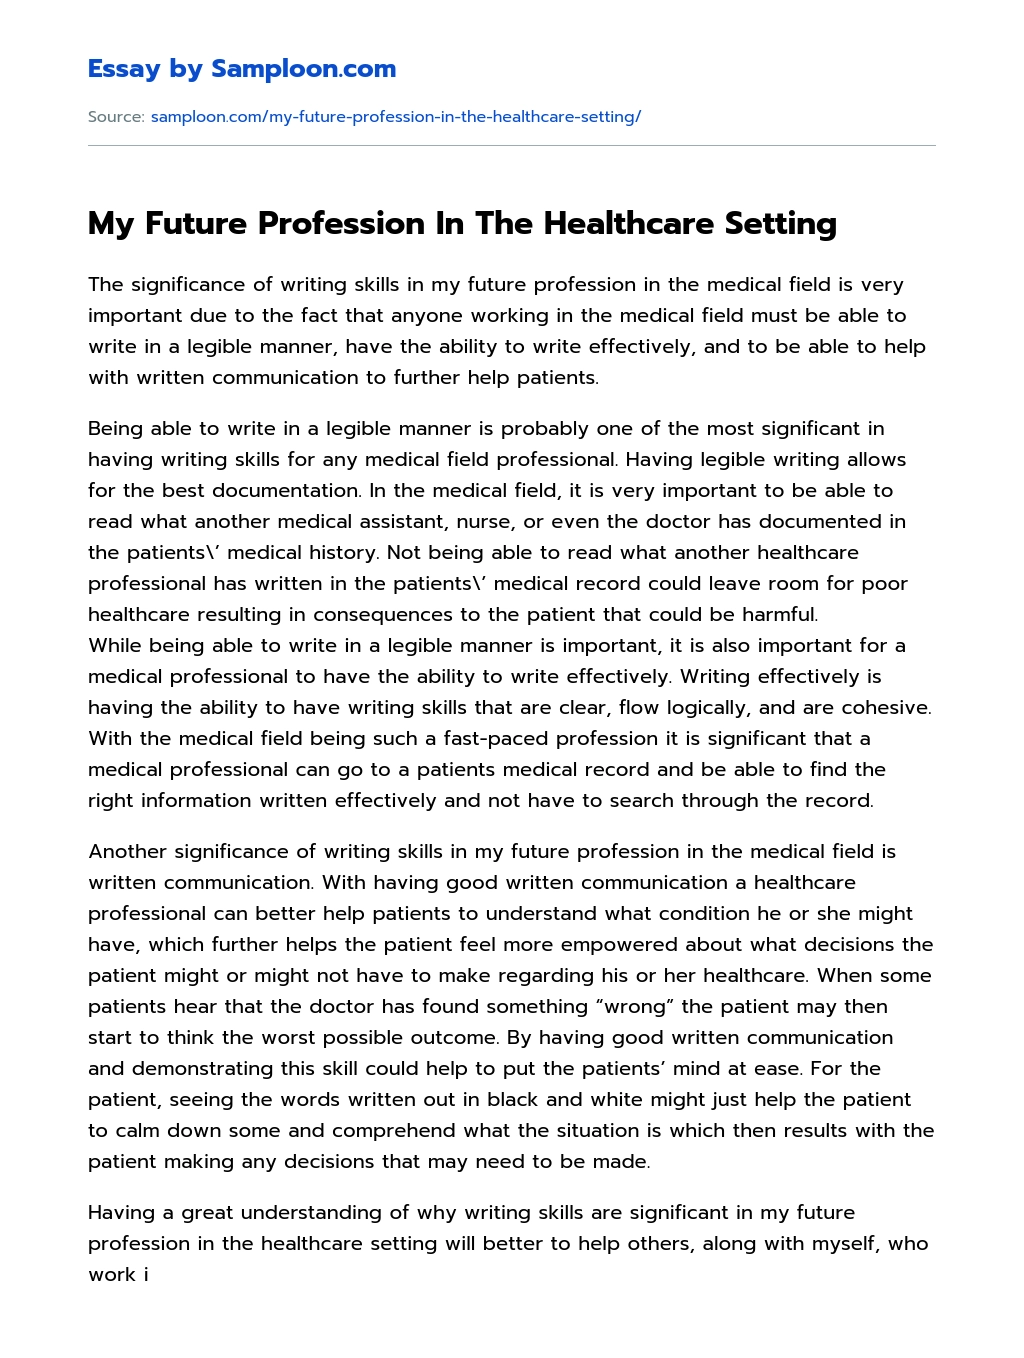 My Future Profession In The Healthcare Setting essay